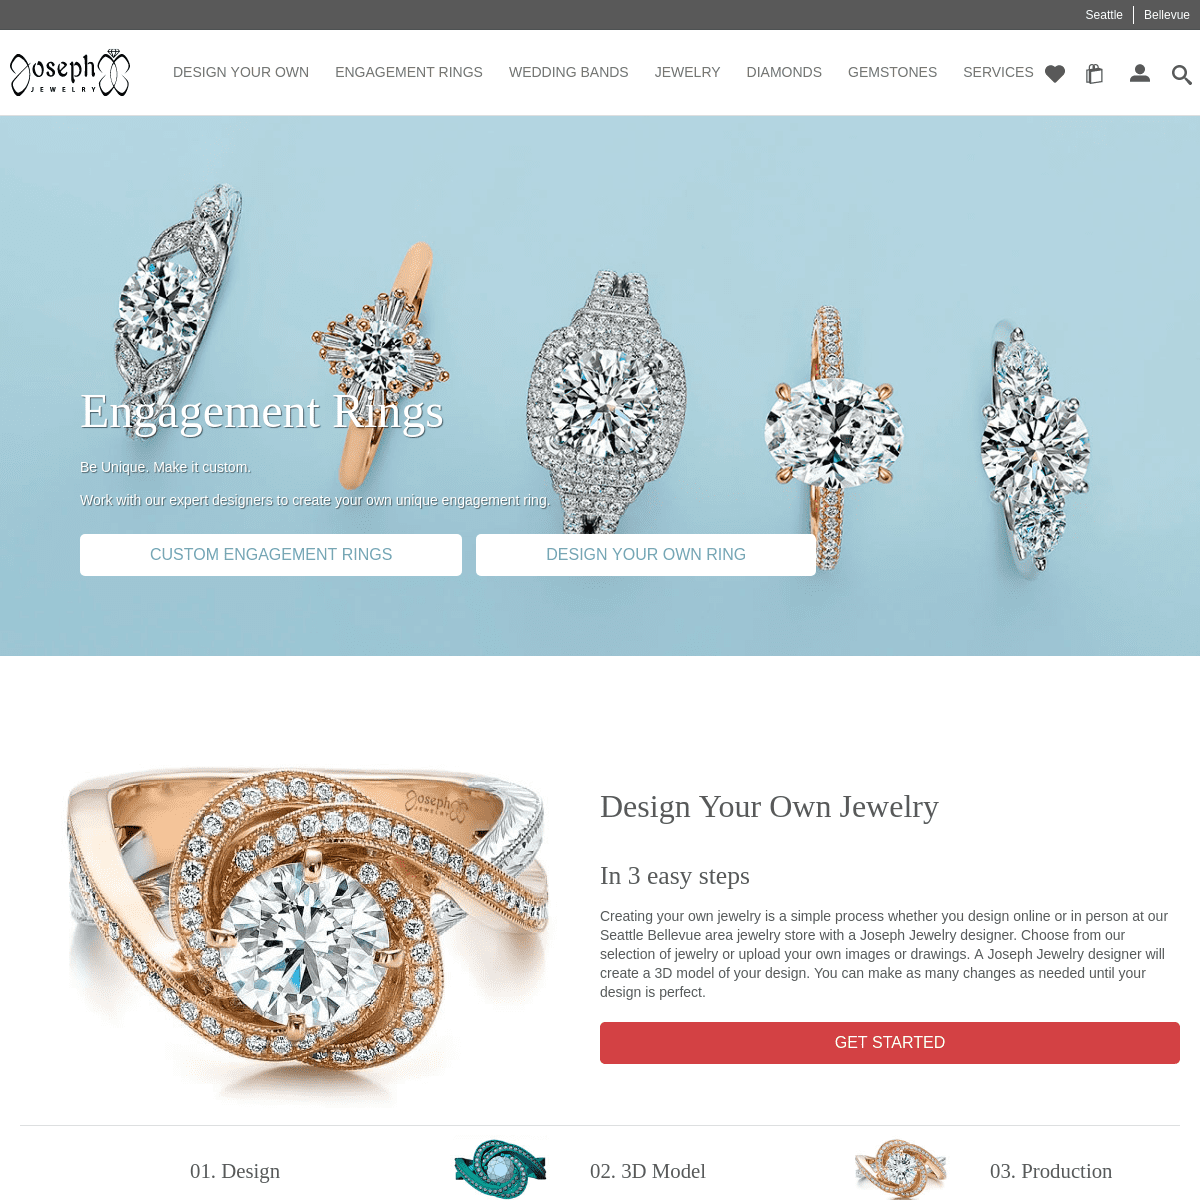 A complete backup of josephjewelry.com